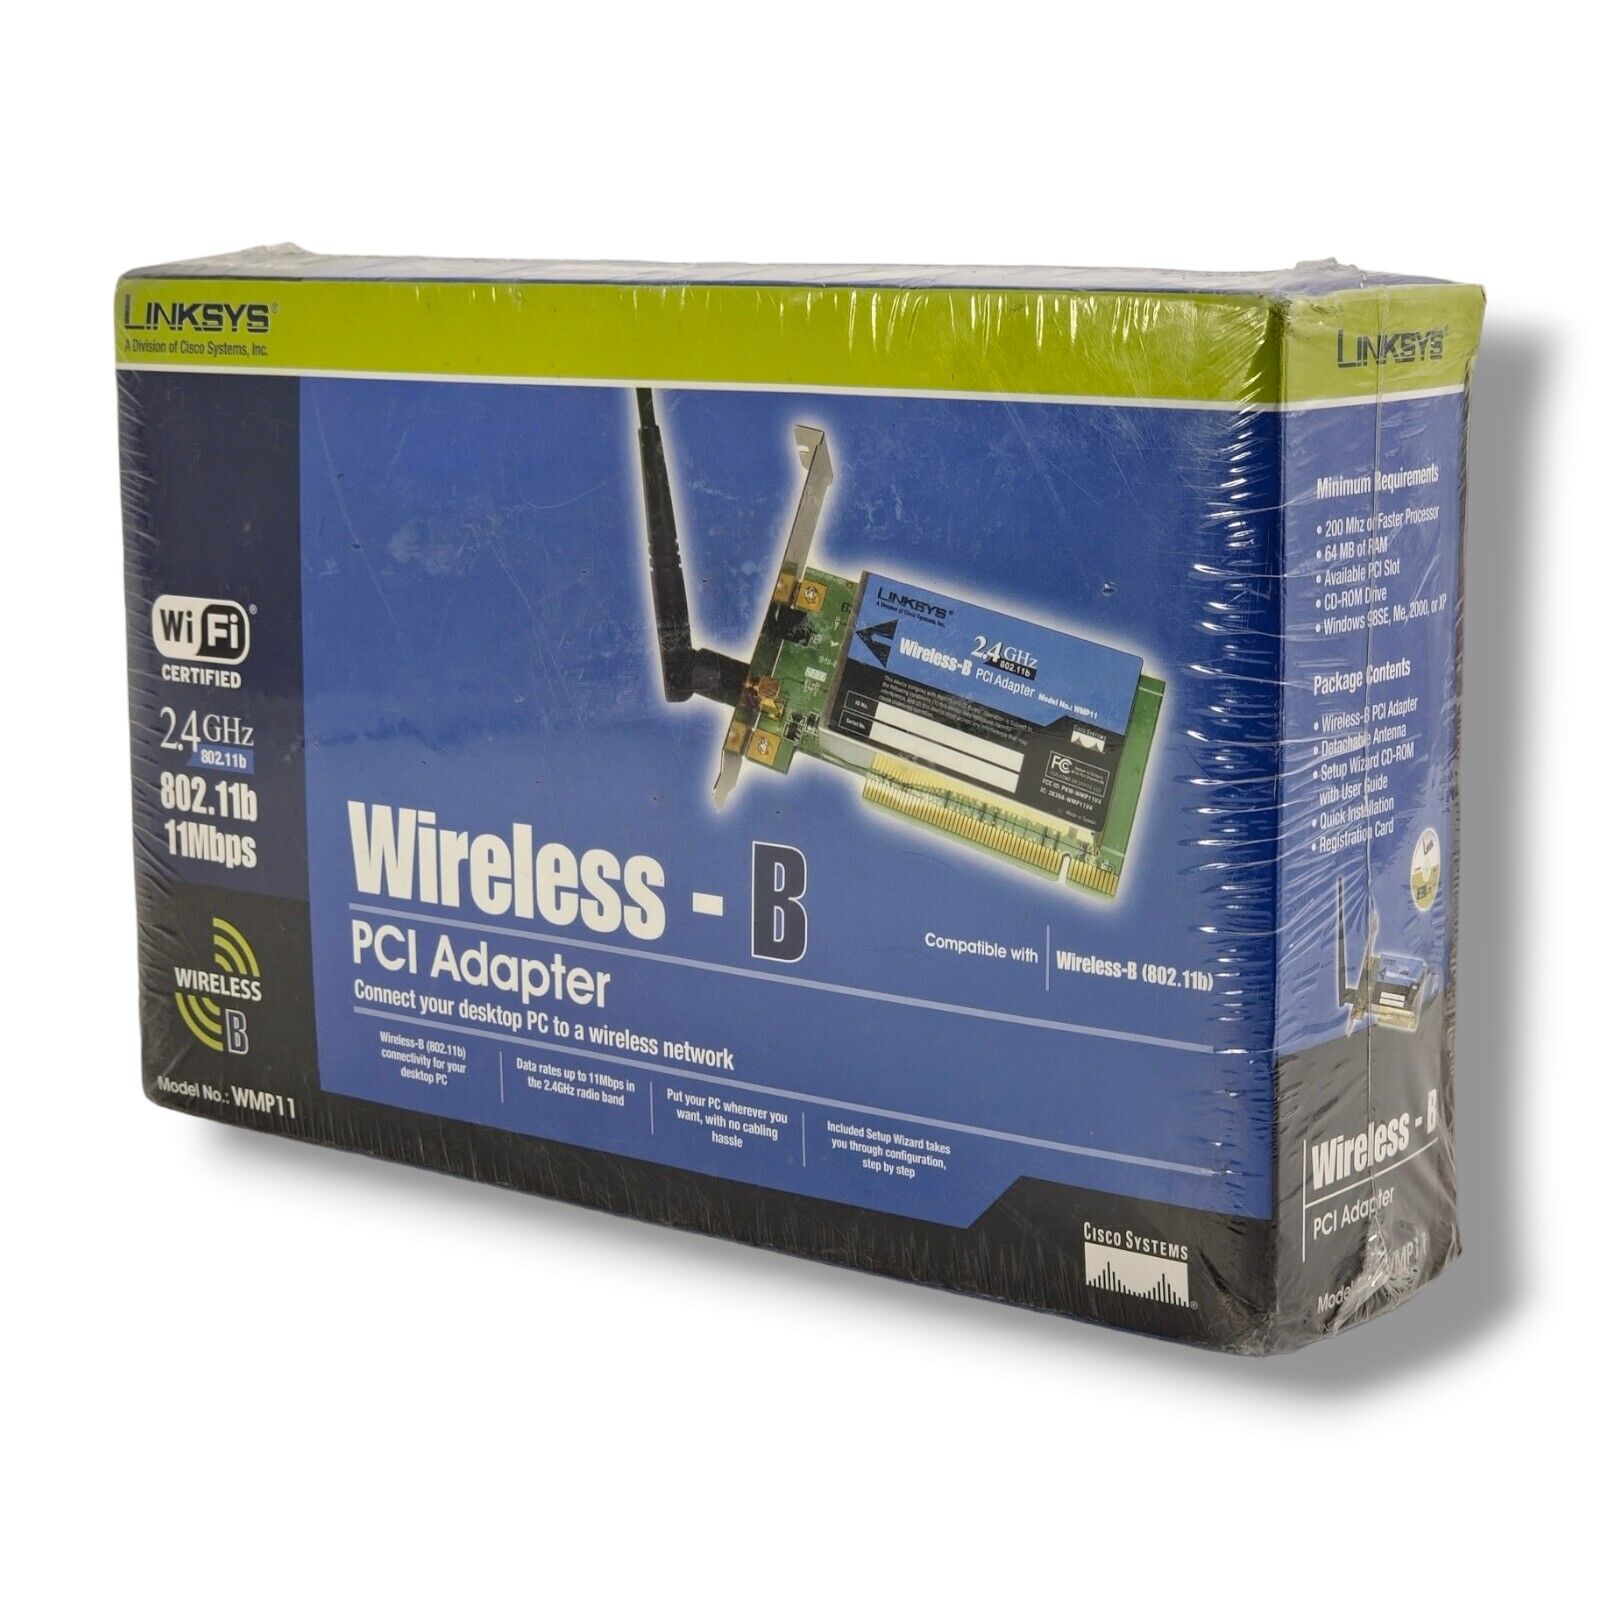 Cisco Linksys Wireless-B PCI Adapter WMP11 2.4 GHz 802.11b 11Mbps New in Box